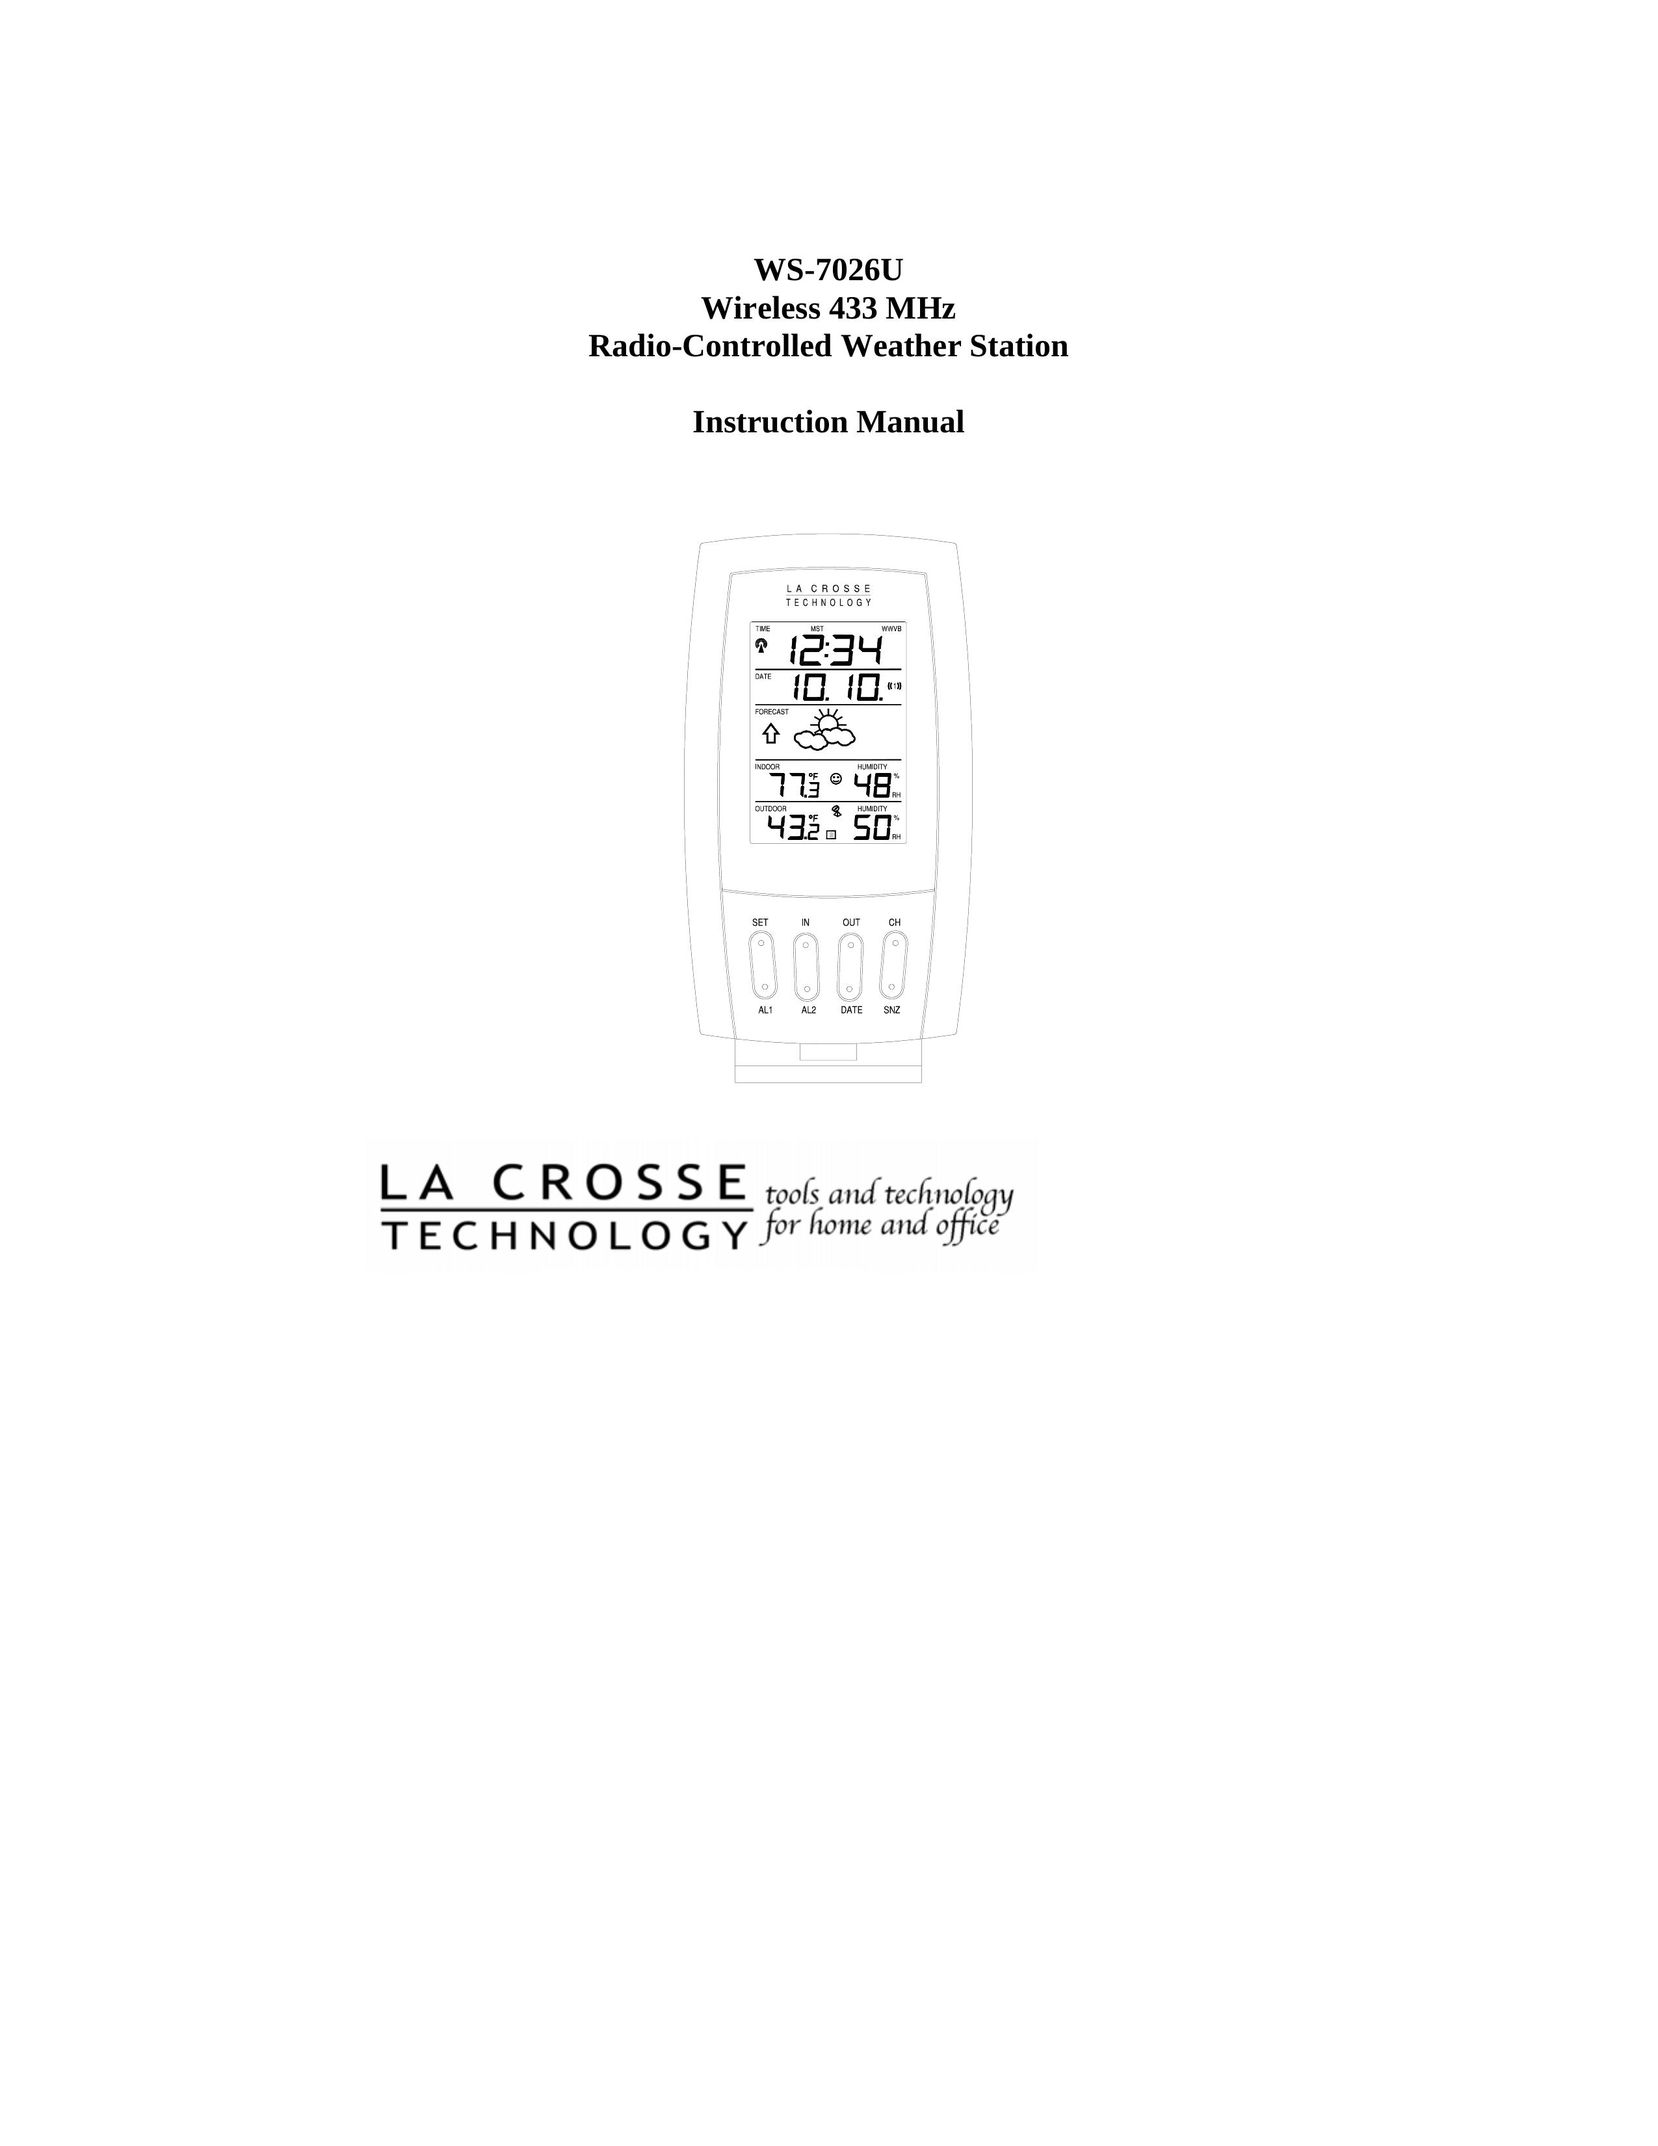 La Crosse Technology WS-7026U Portable Radio User Manual